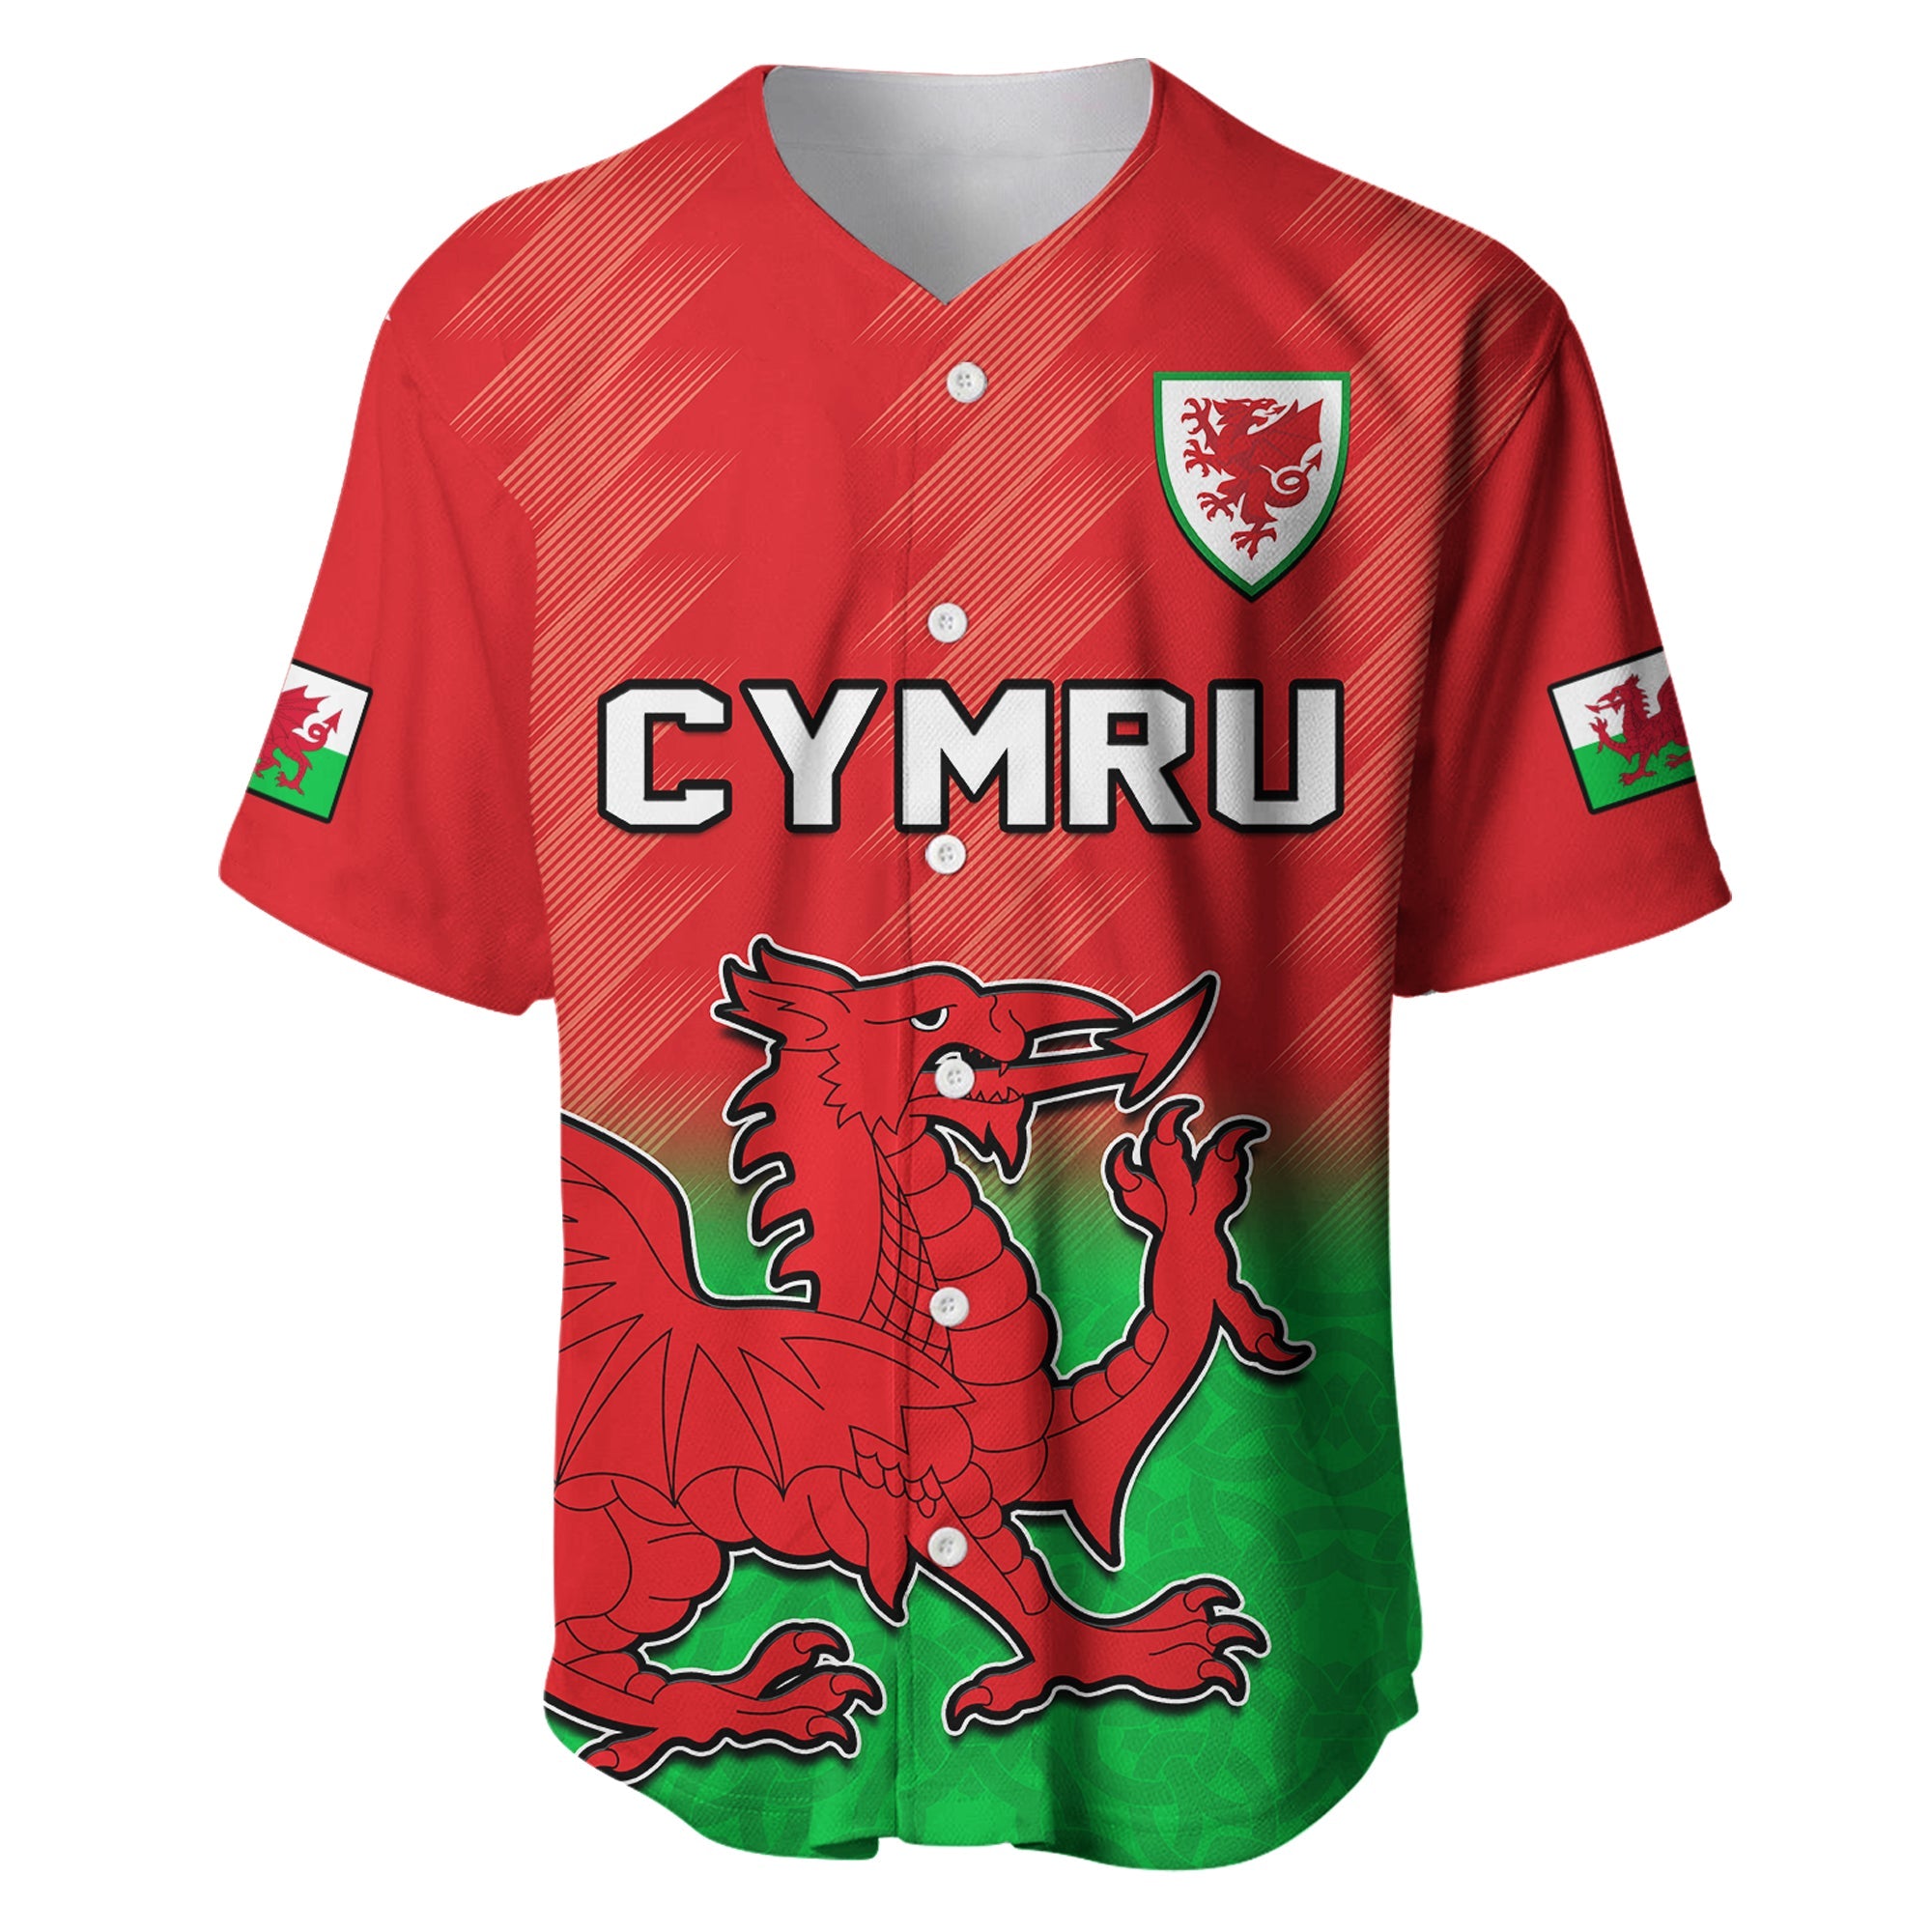 wales-football-baseball-jersey-world-cup-2022-come-on-cymru-yma-o-hyd